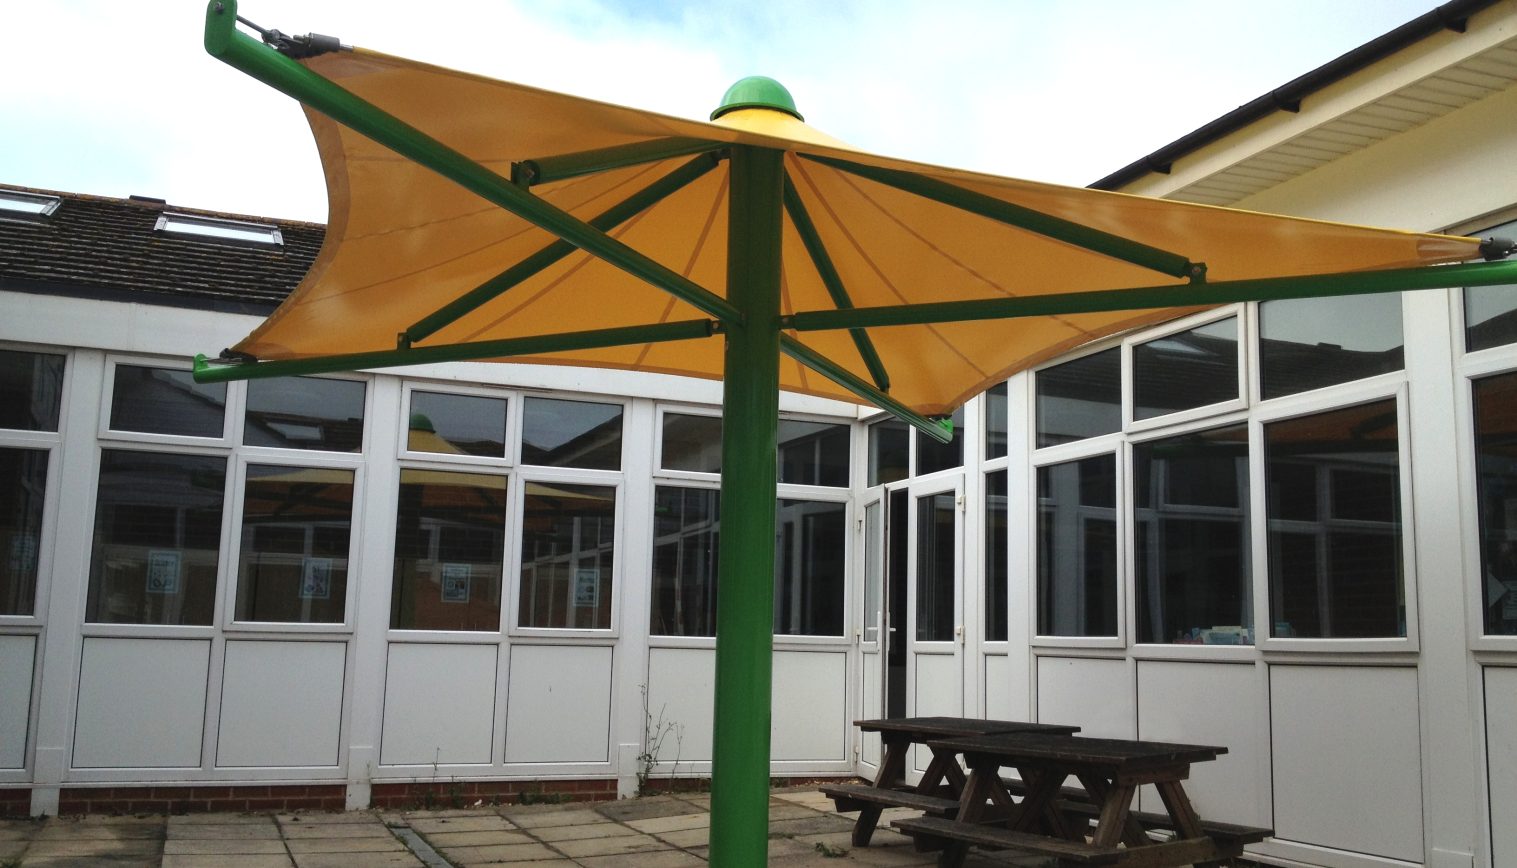 Bishop Tufnell CE Infant School – Third Tensile Umbrella Canopy